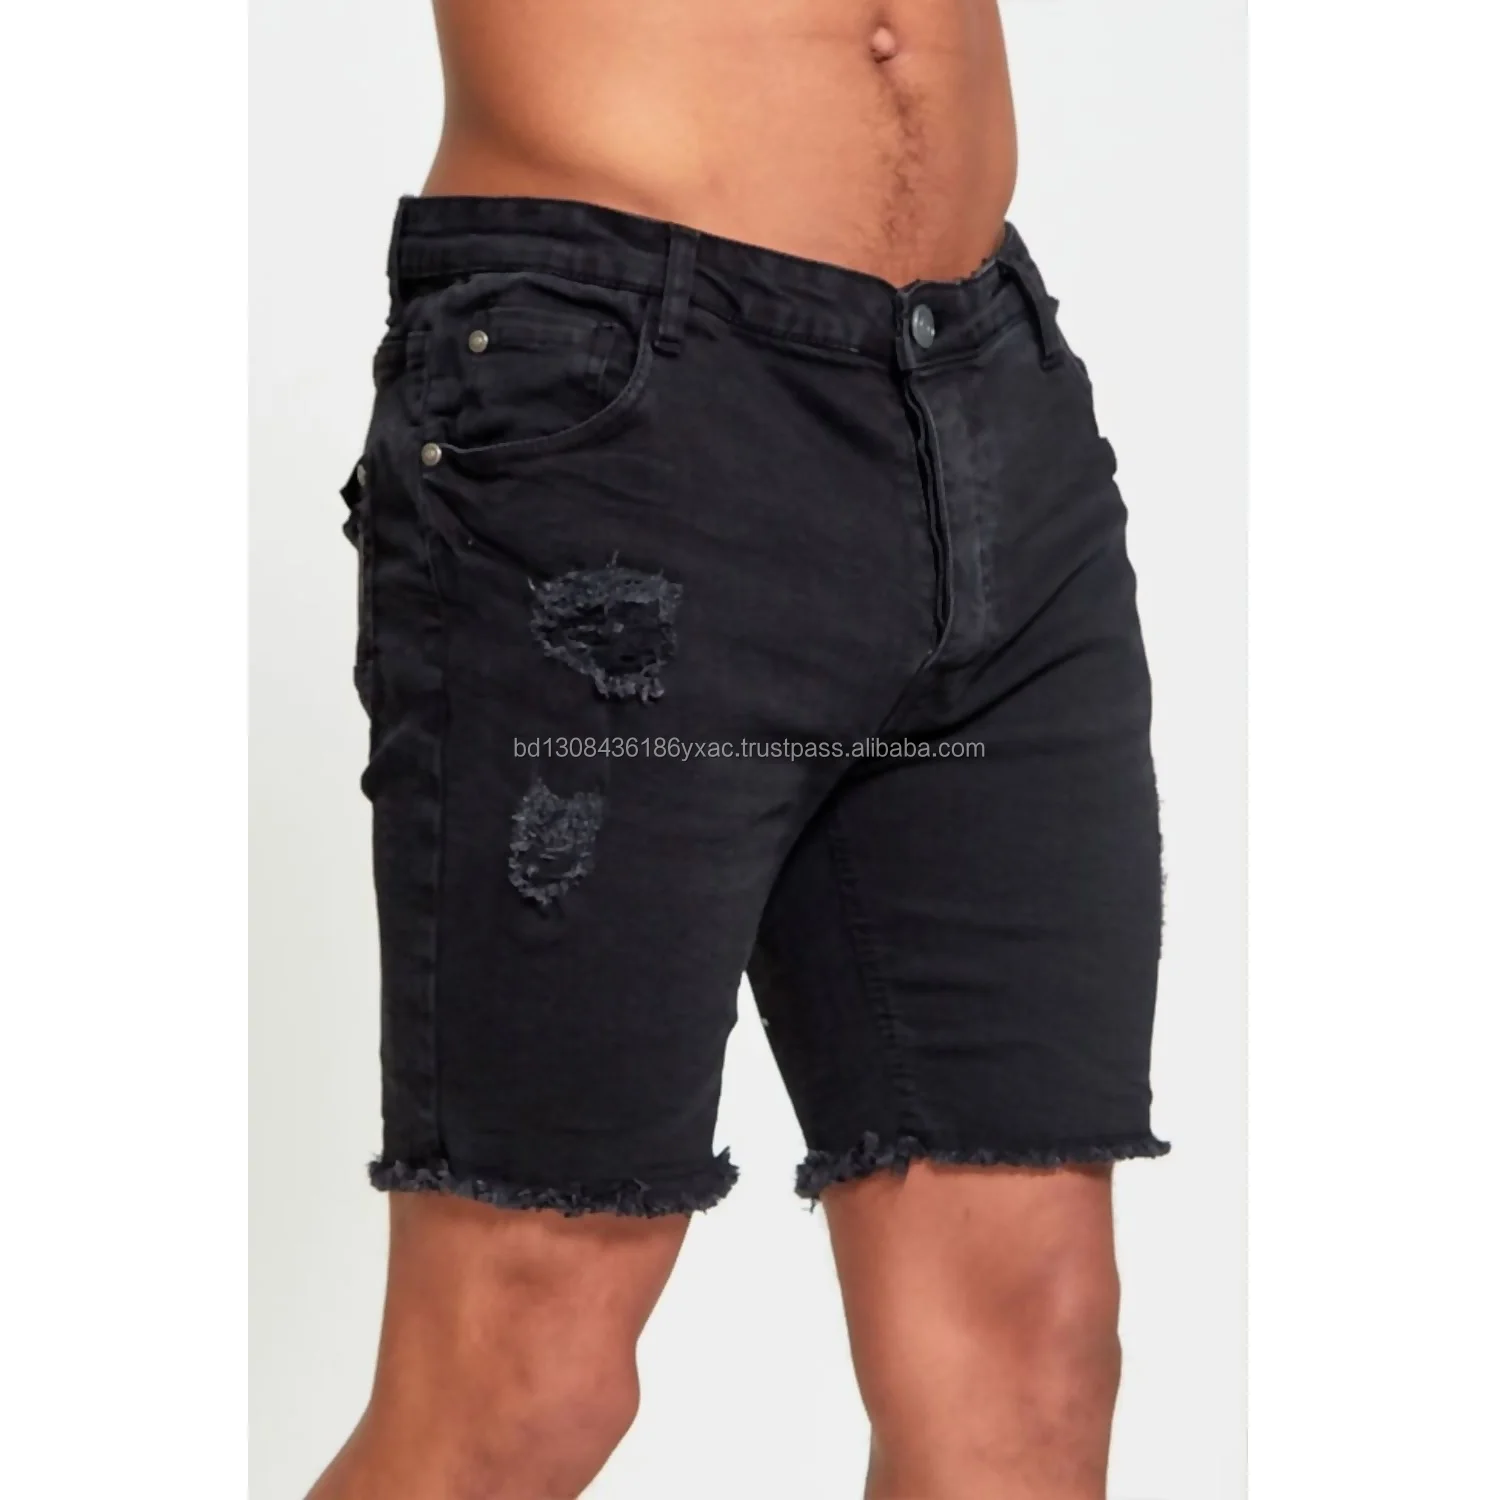 Smart Causal Design Men's Black Denim Shorts From Bangladesh - Buy Jean ...